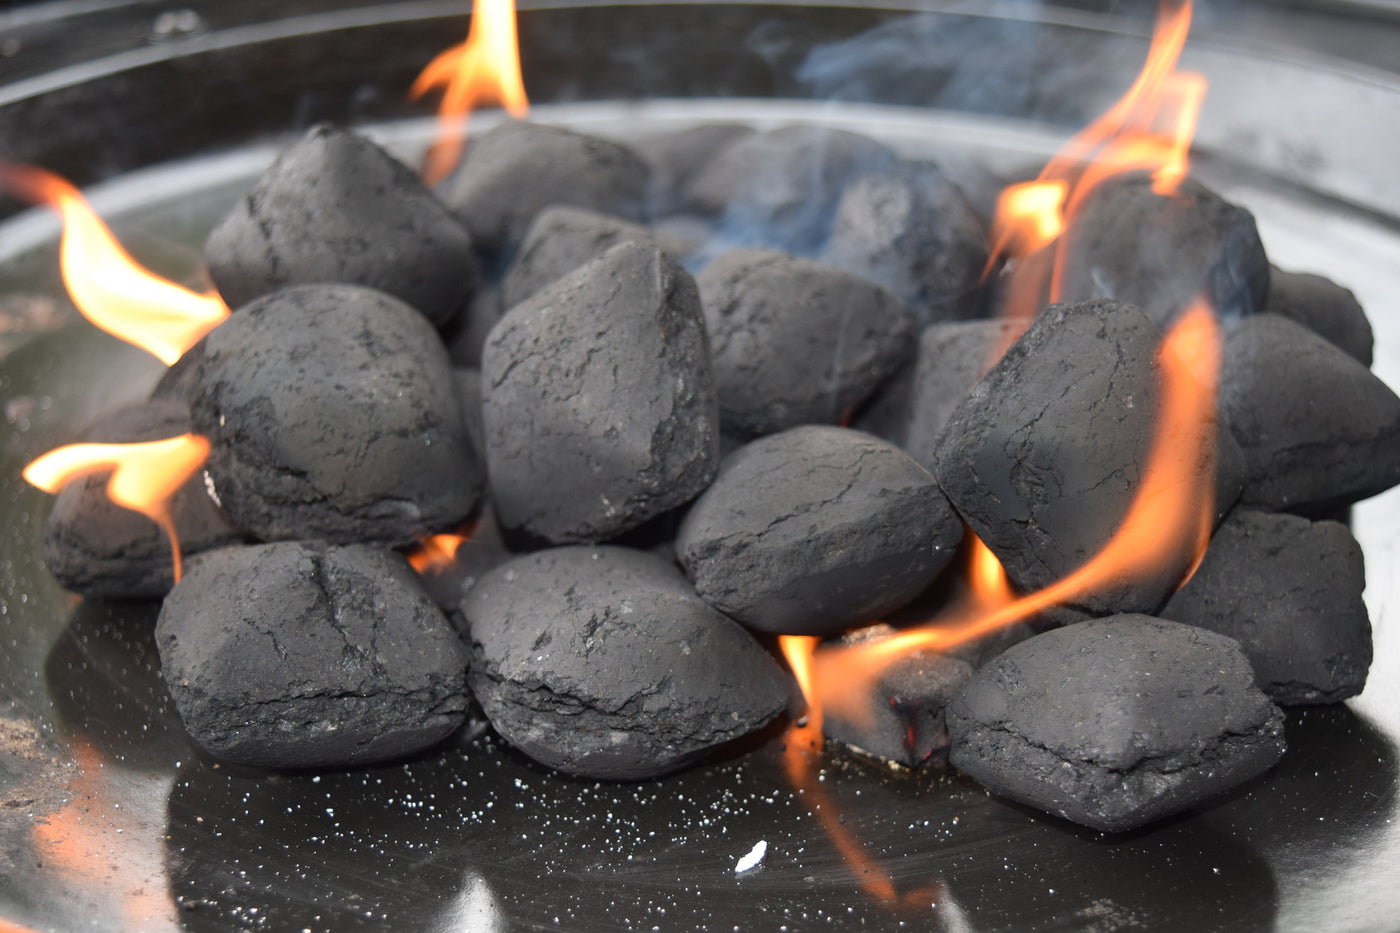 2 Sacos Carbón Briquetas Quebracho 20 kilos + Despacho Gratis en Santiago* - Carbón Quebracho